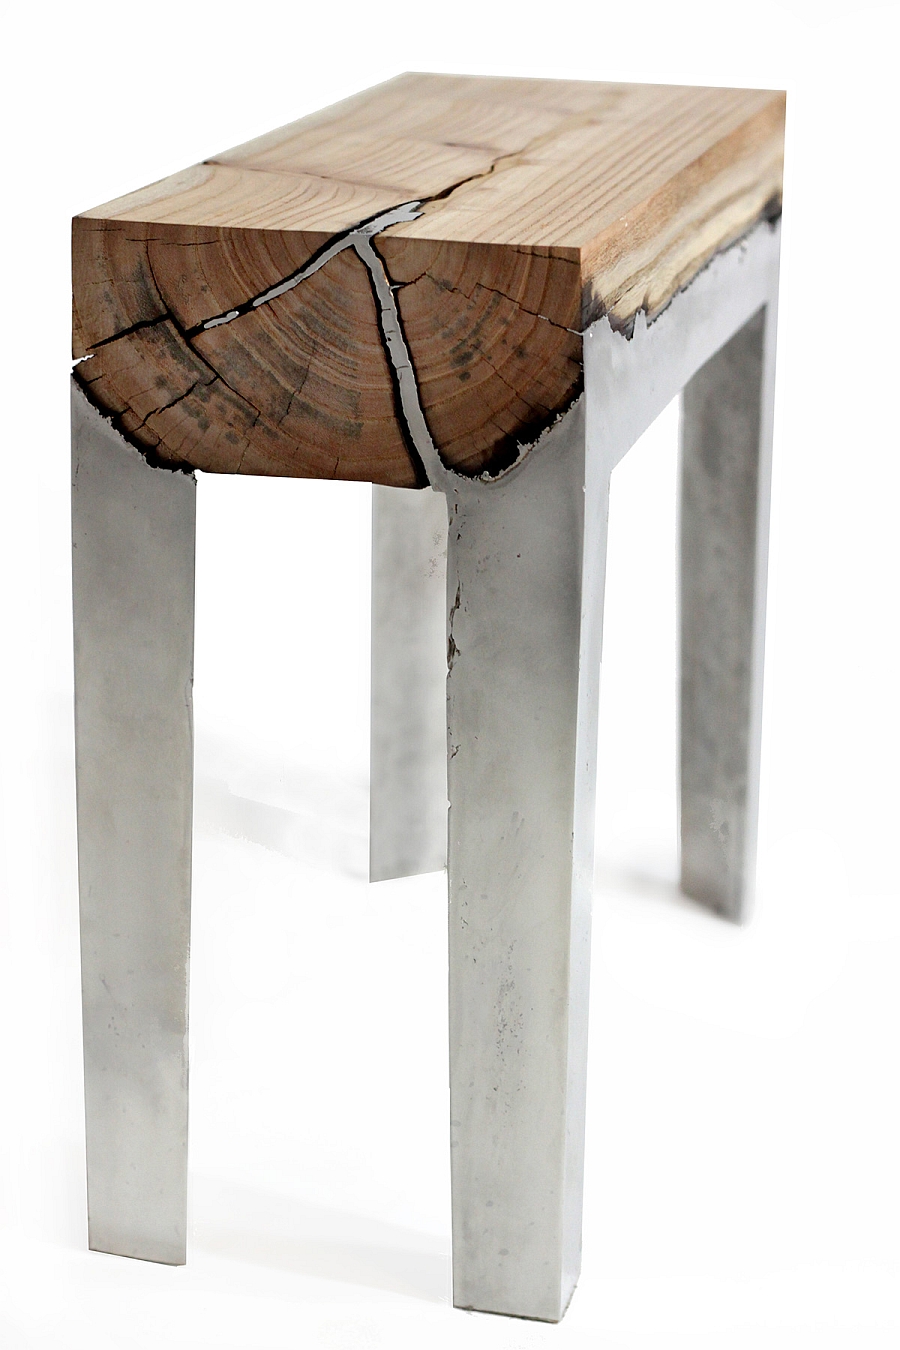 Burnt carbon edges give the unique stools a look of authenticity